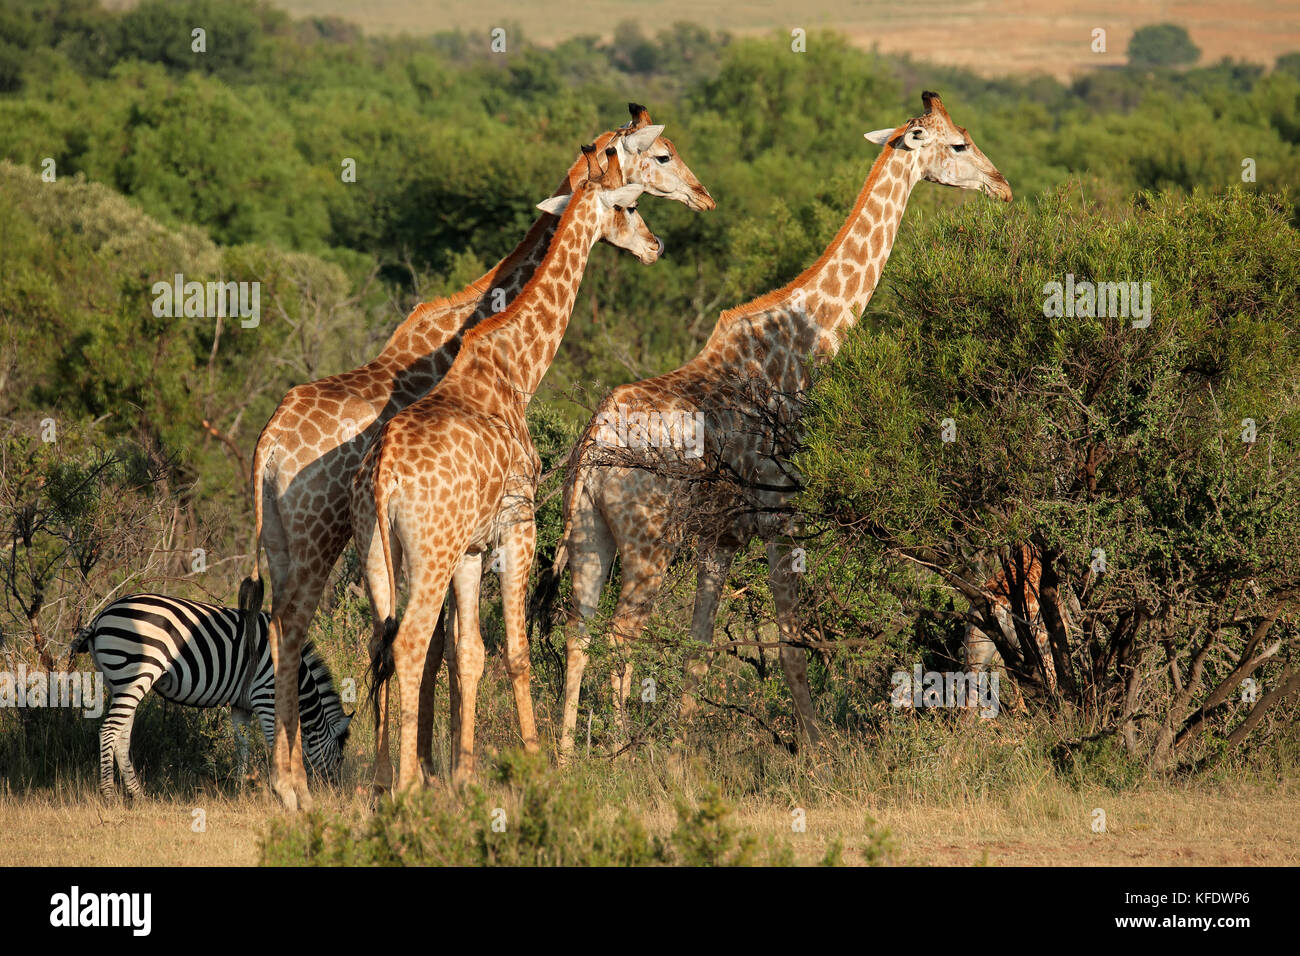 Giraffes (Giraffa camelopardalis) in natural habitat, South Africa Stock Photo